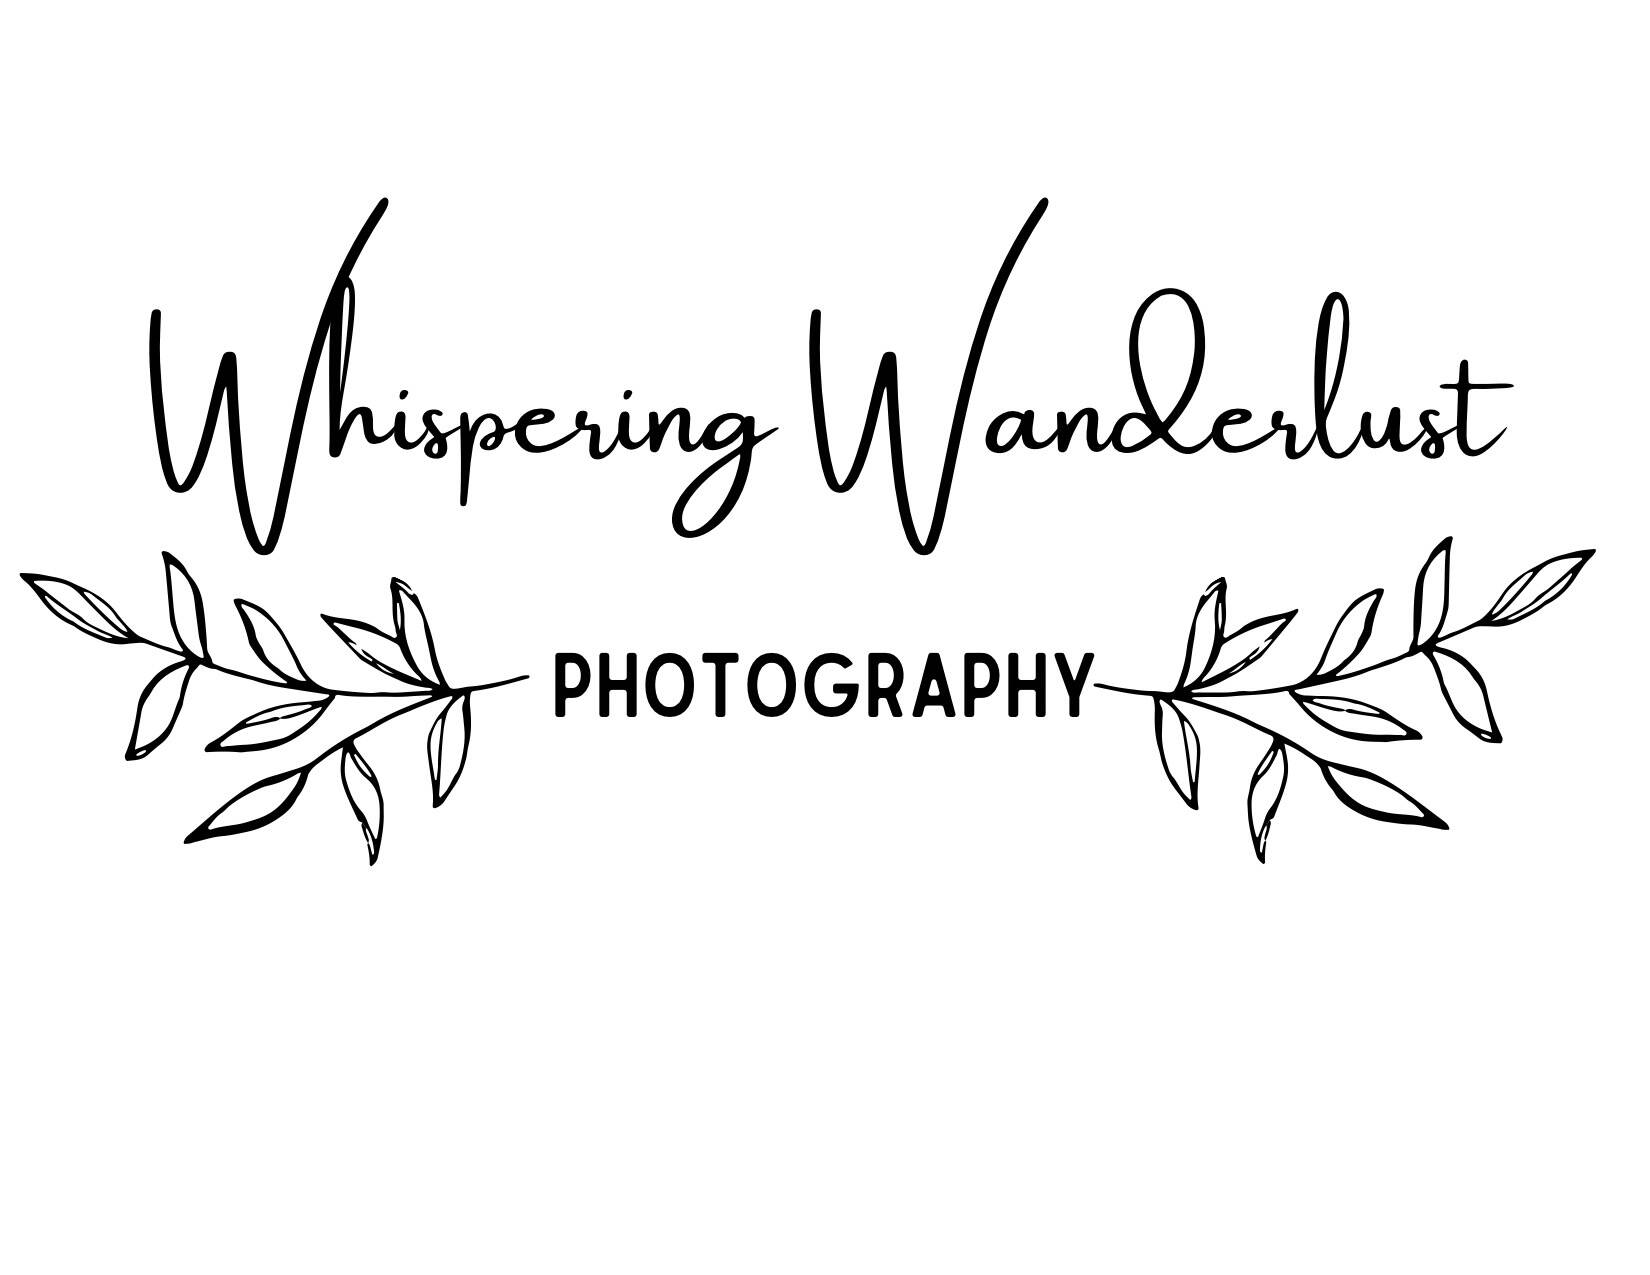 Whispering Wonderlust Photography